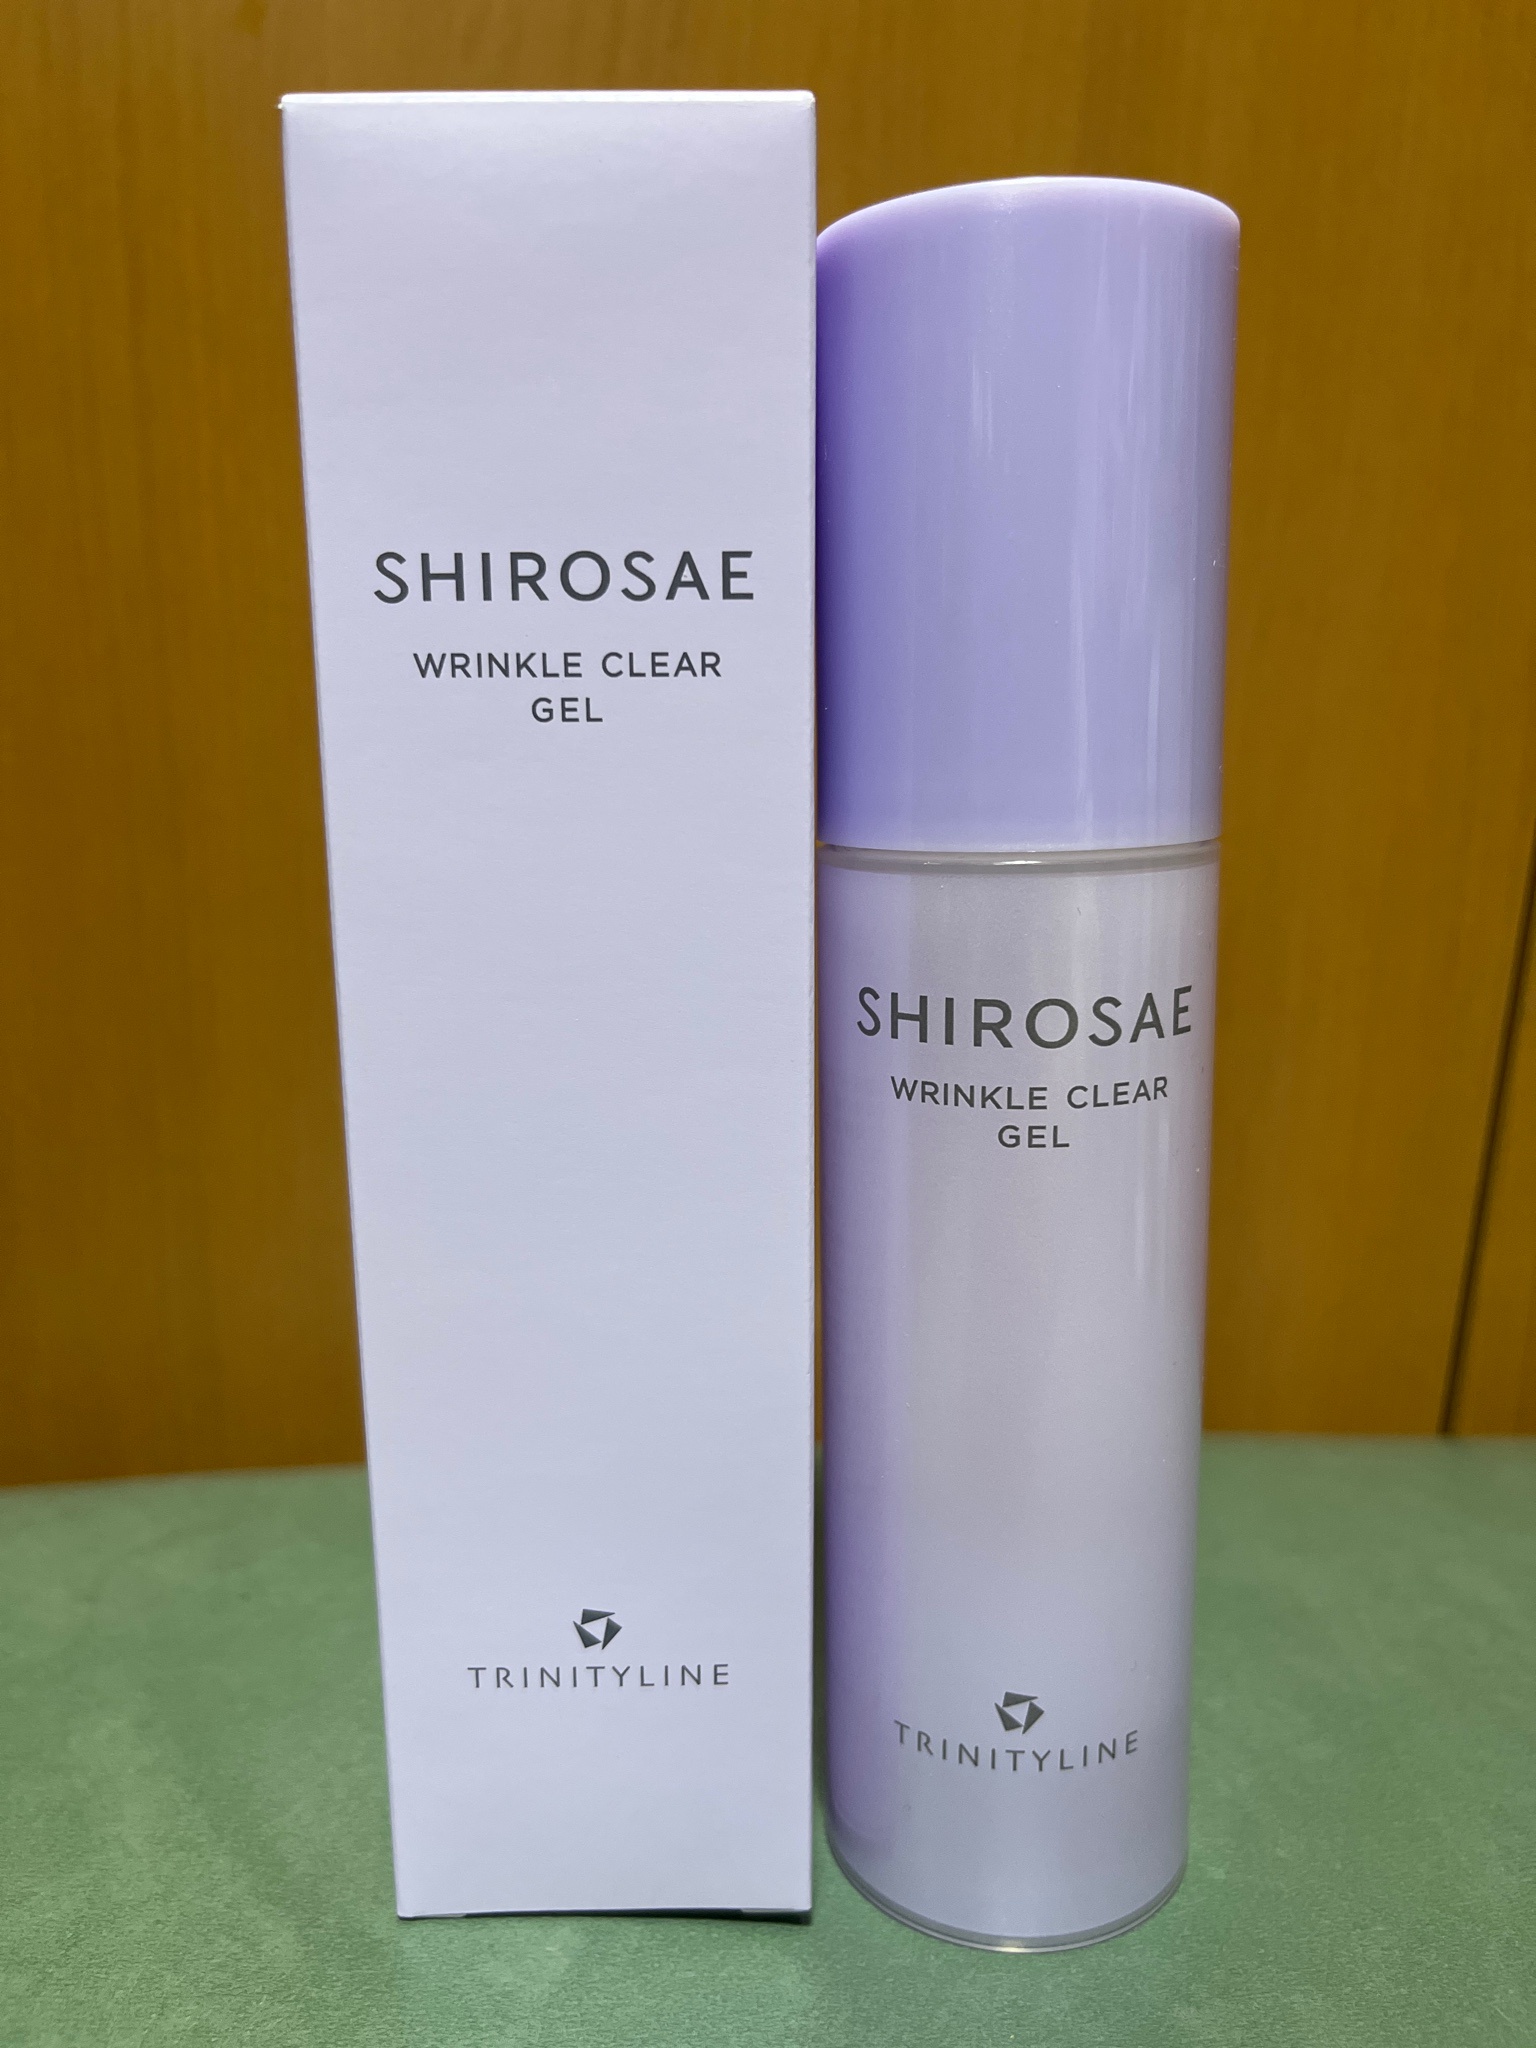 Shirosae しろさえ ホワイトニングジェル 50g 基礎化粧品 | seniorwings.jpn.org